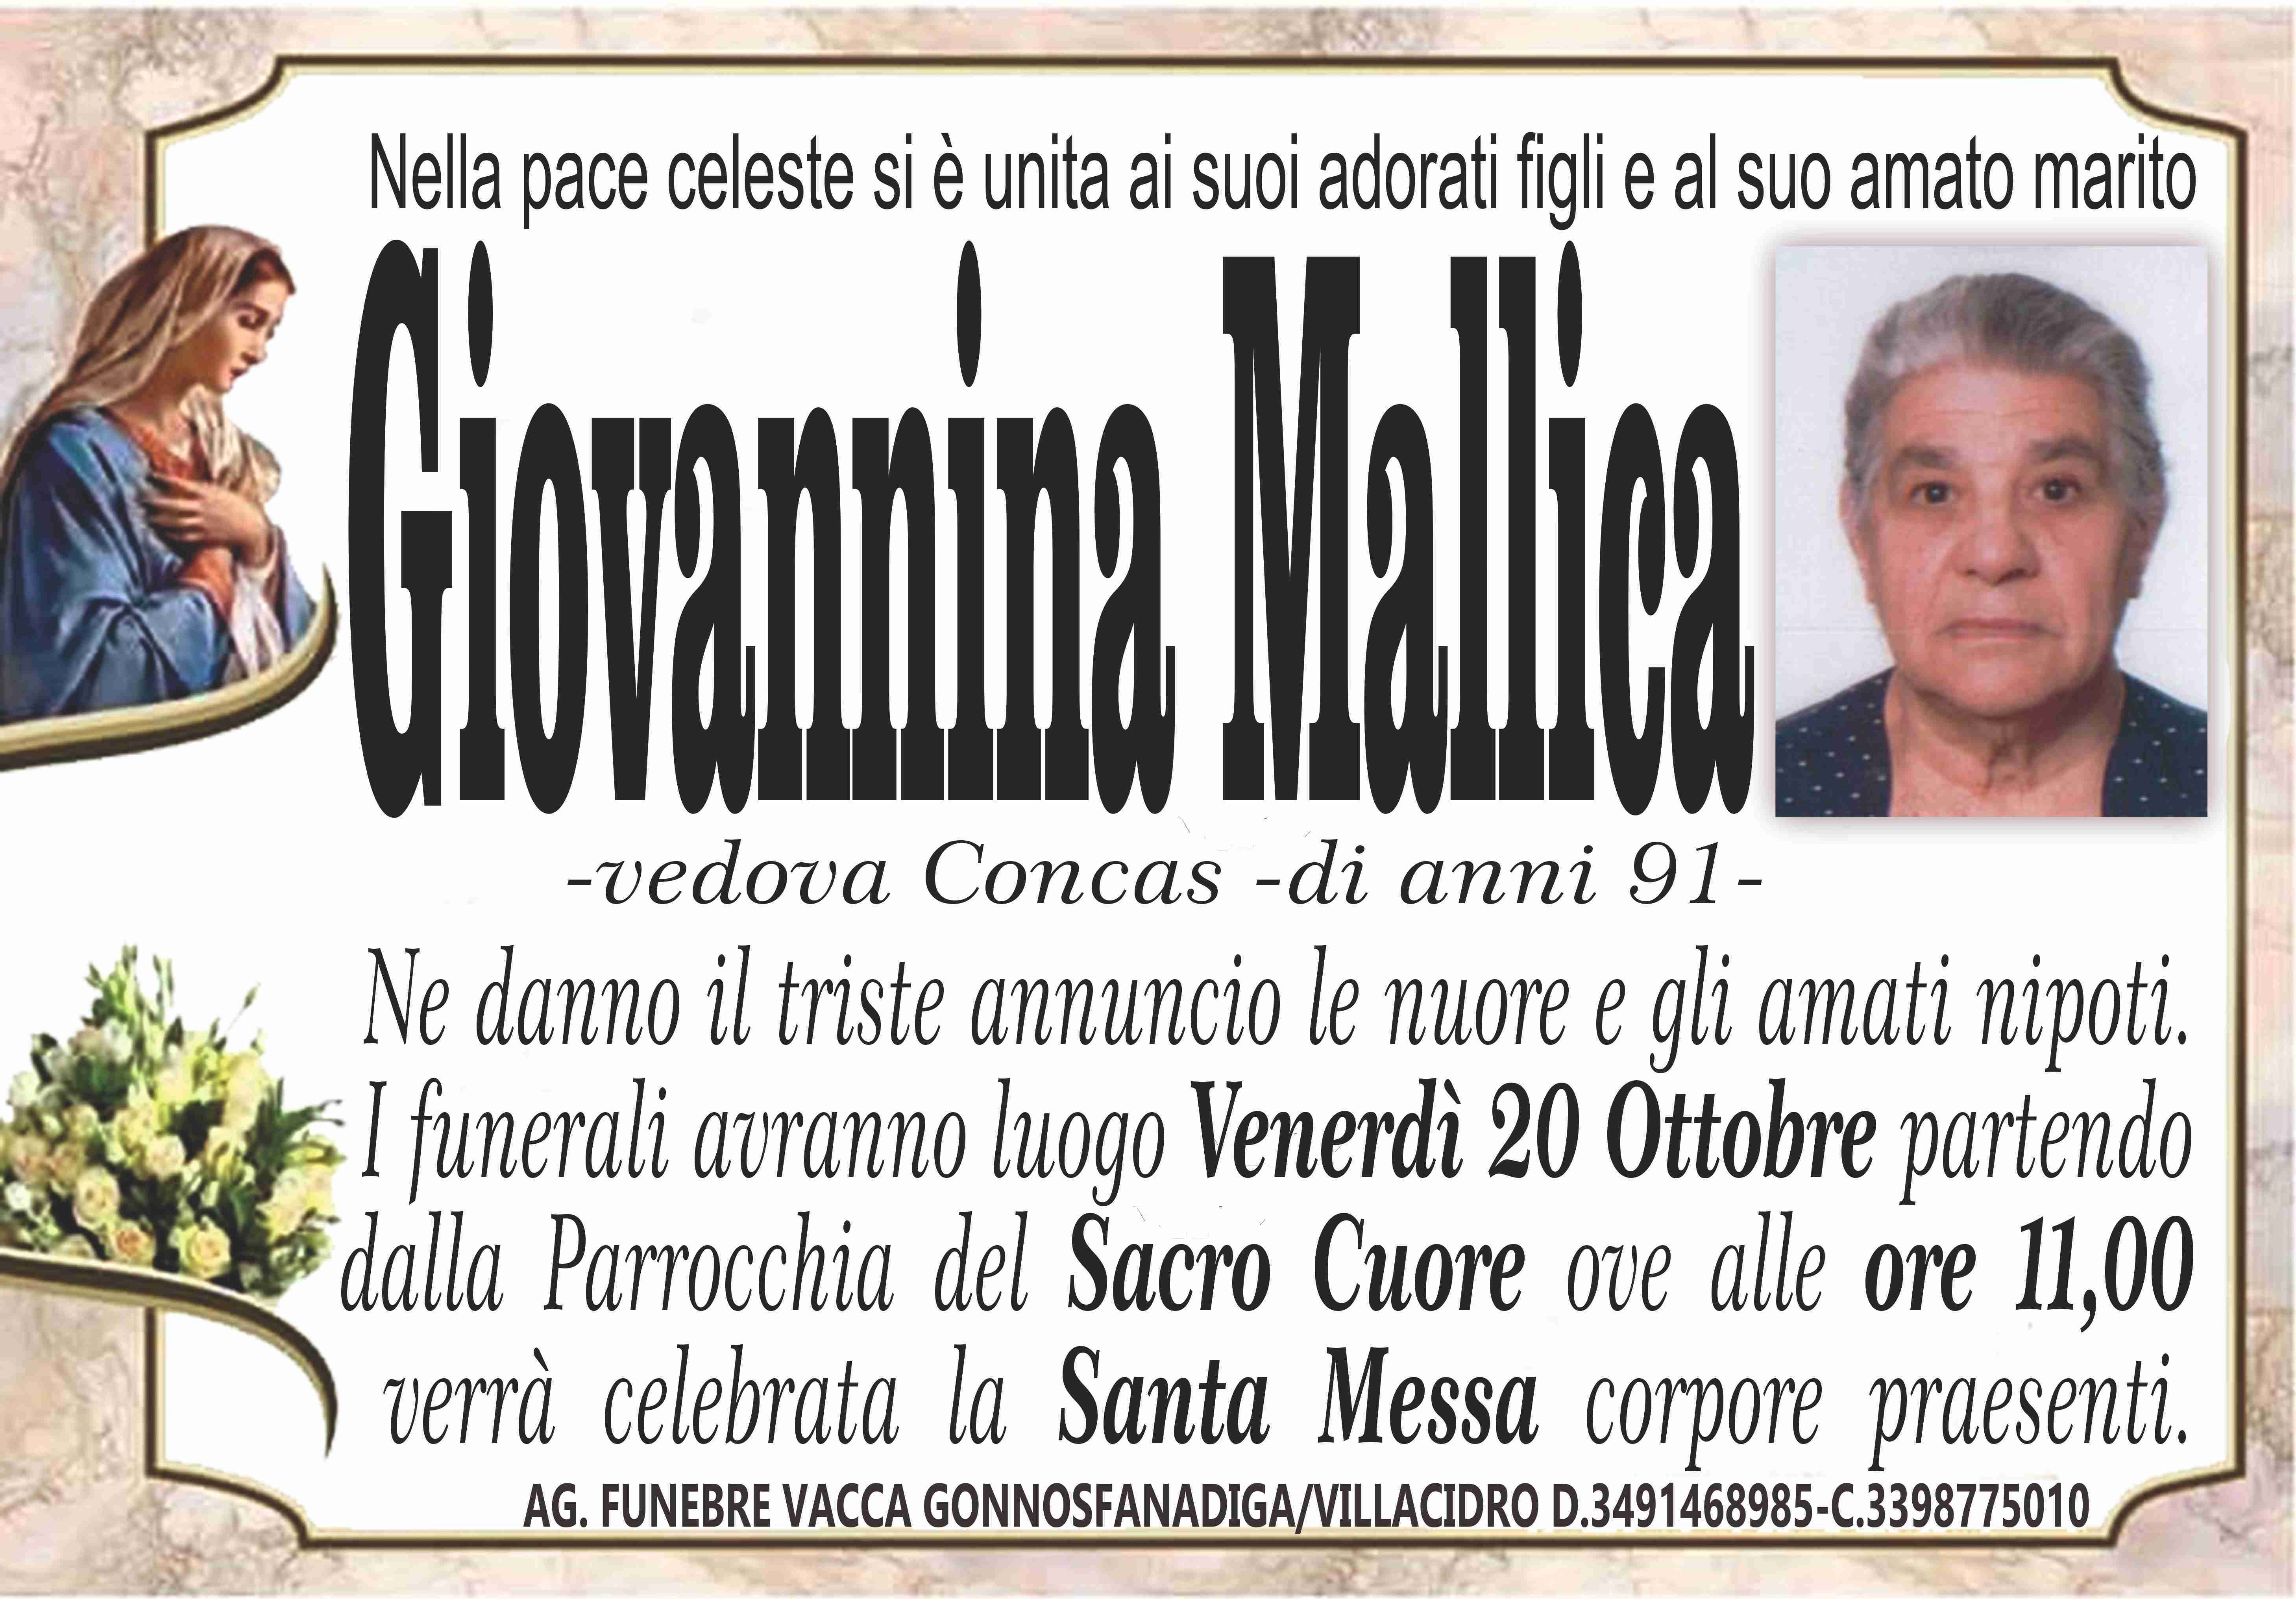 Giovannina Mallica